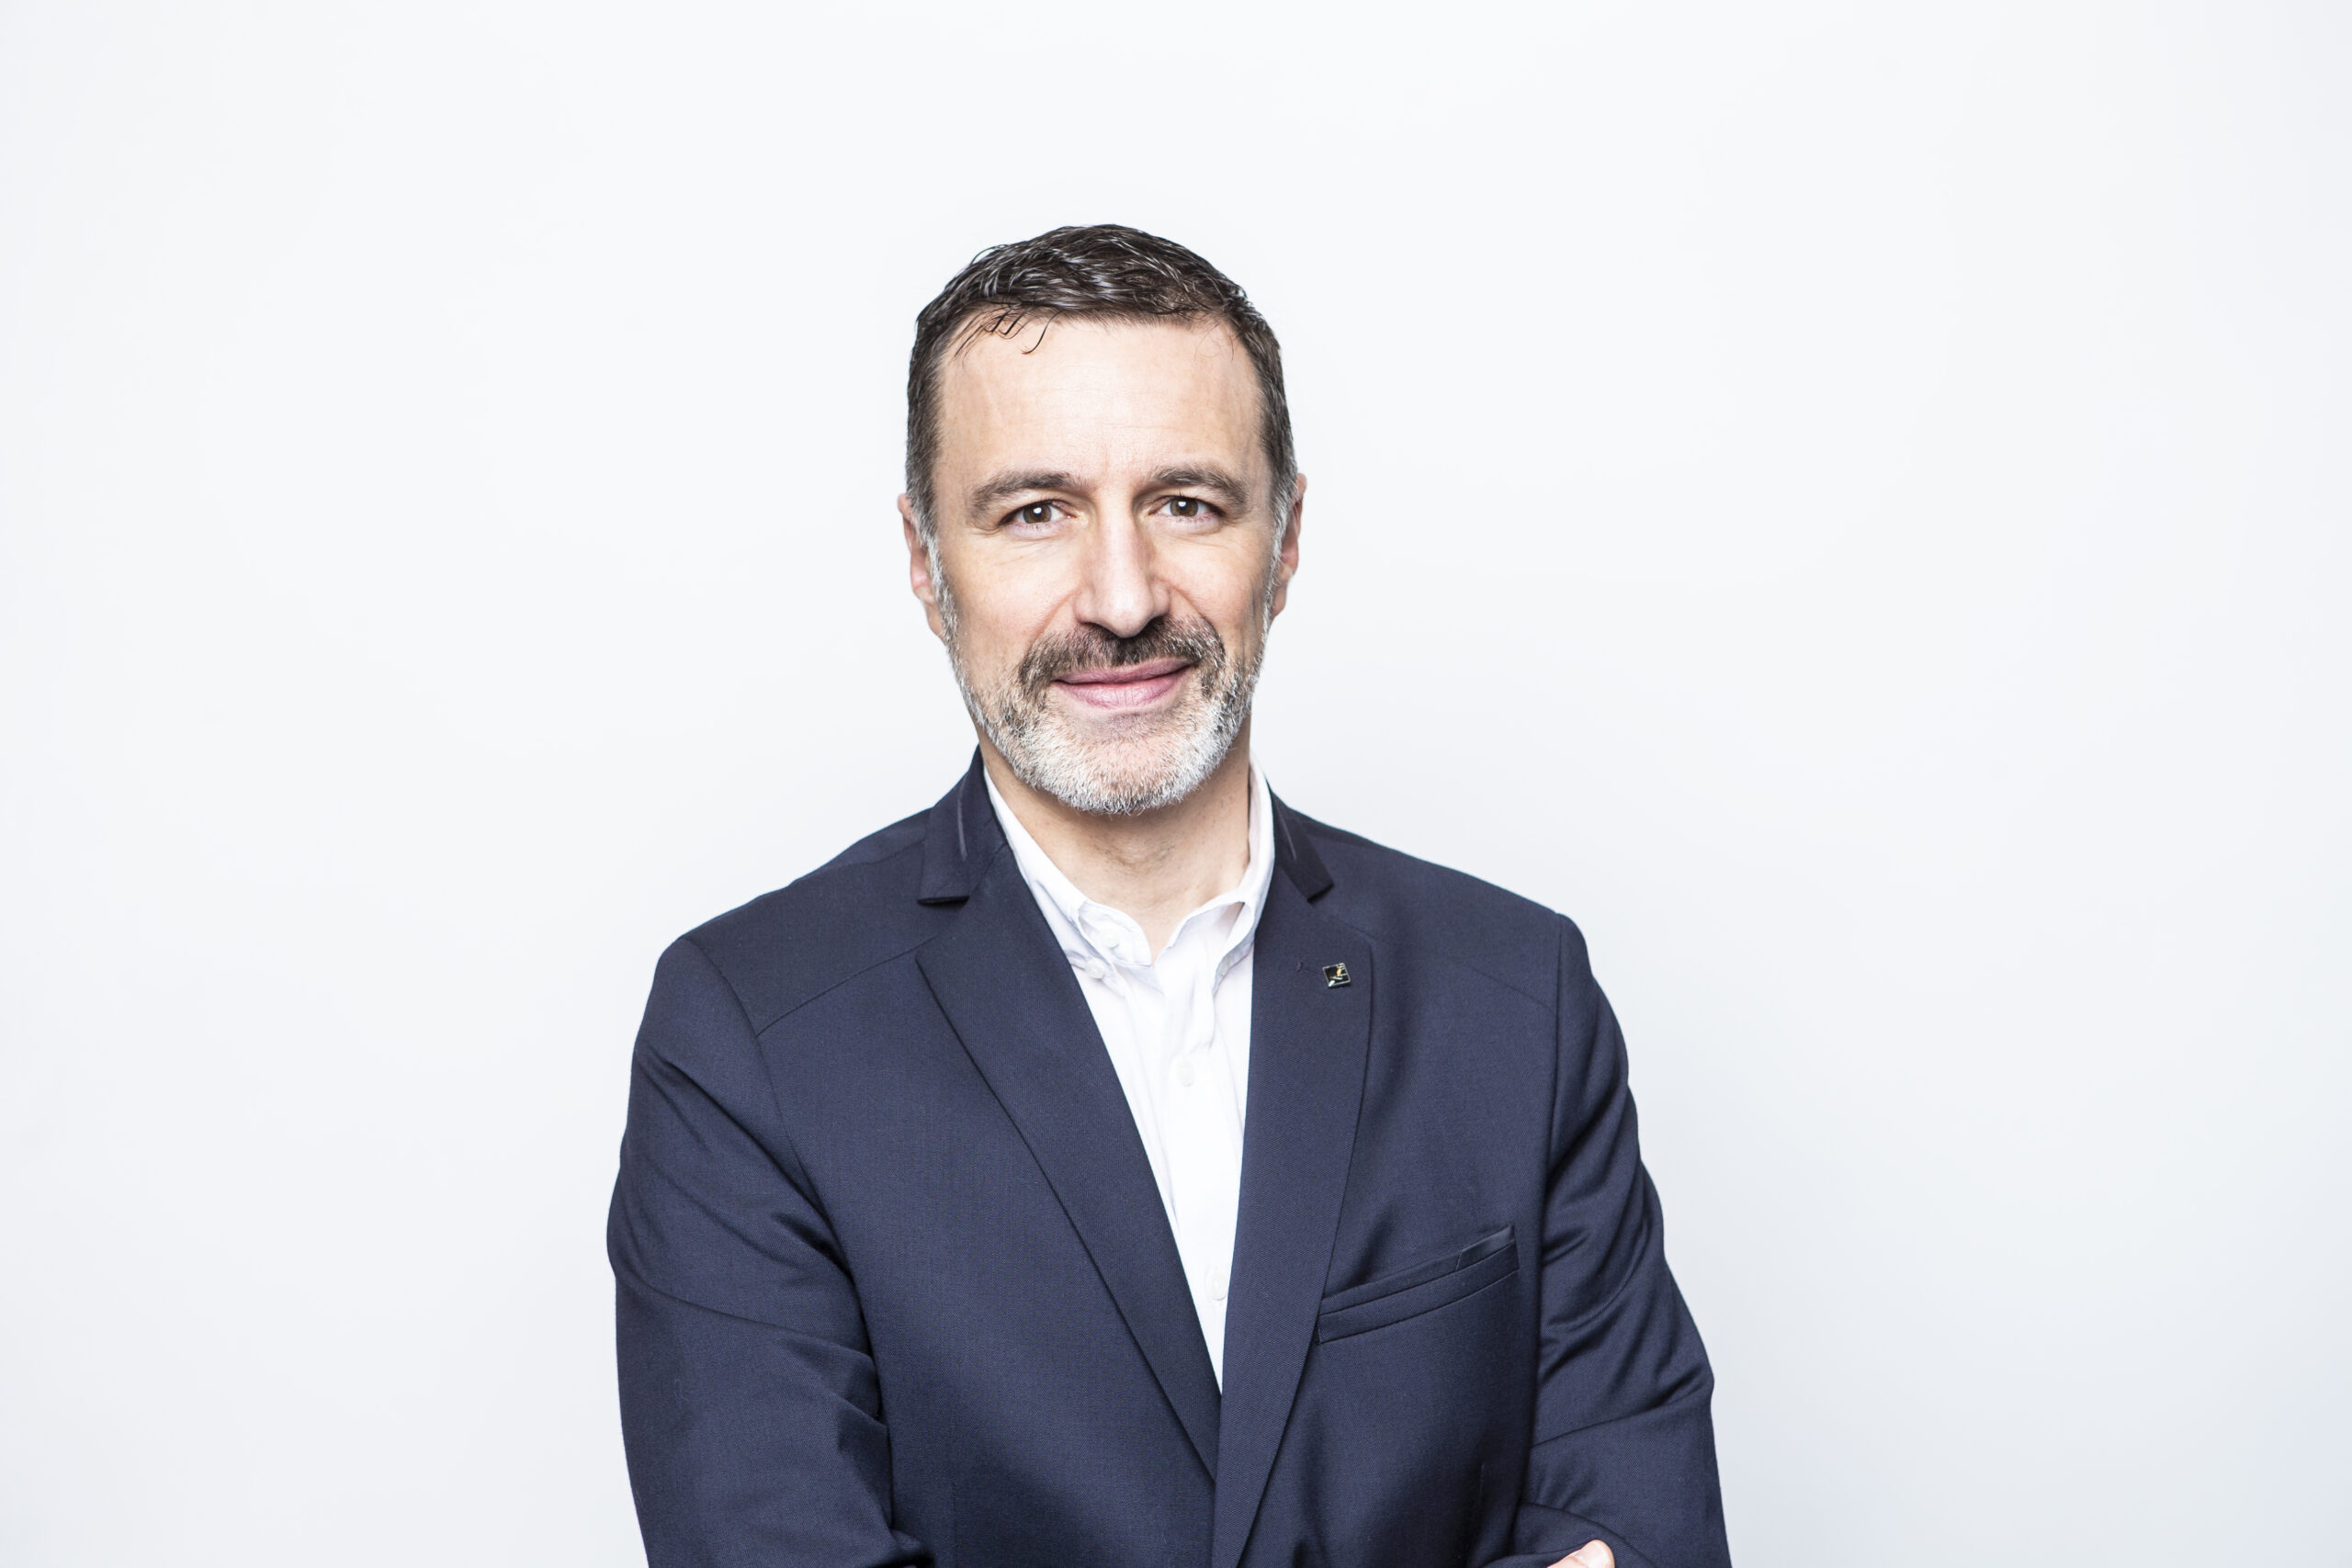 José Fernandez Présidnt de Agency of the year 2022